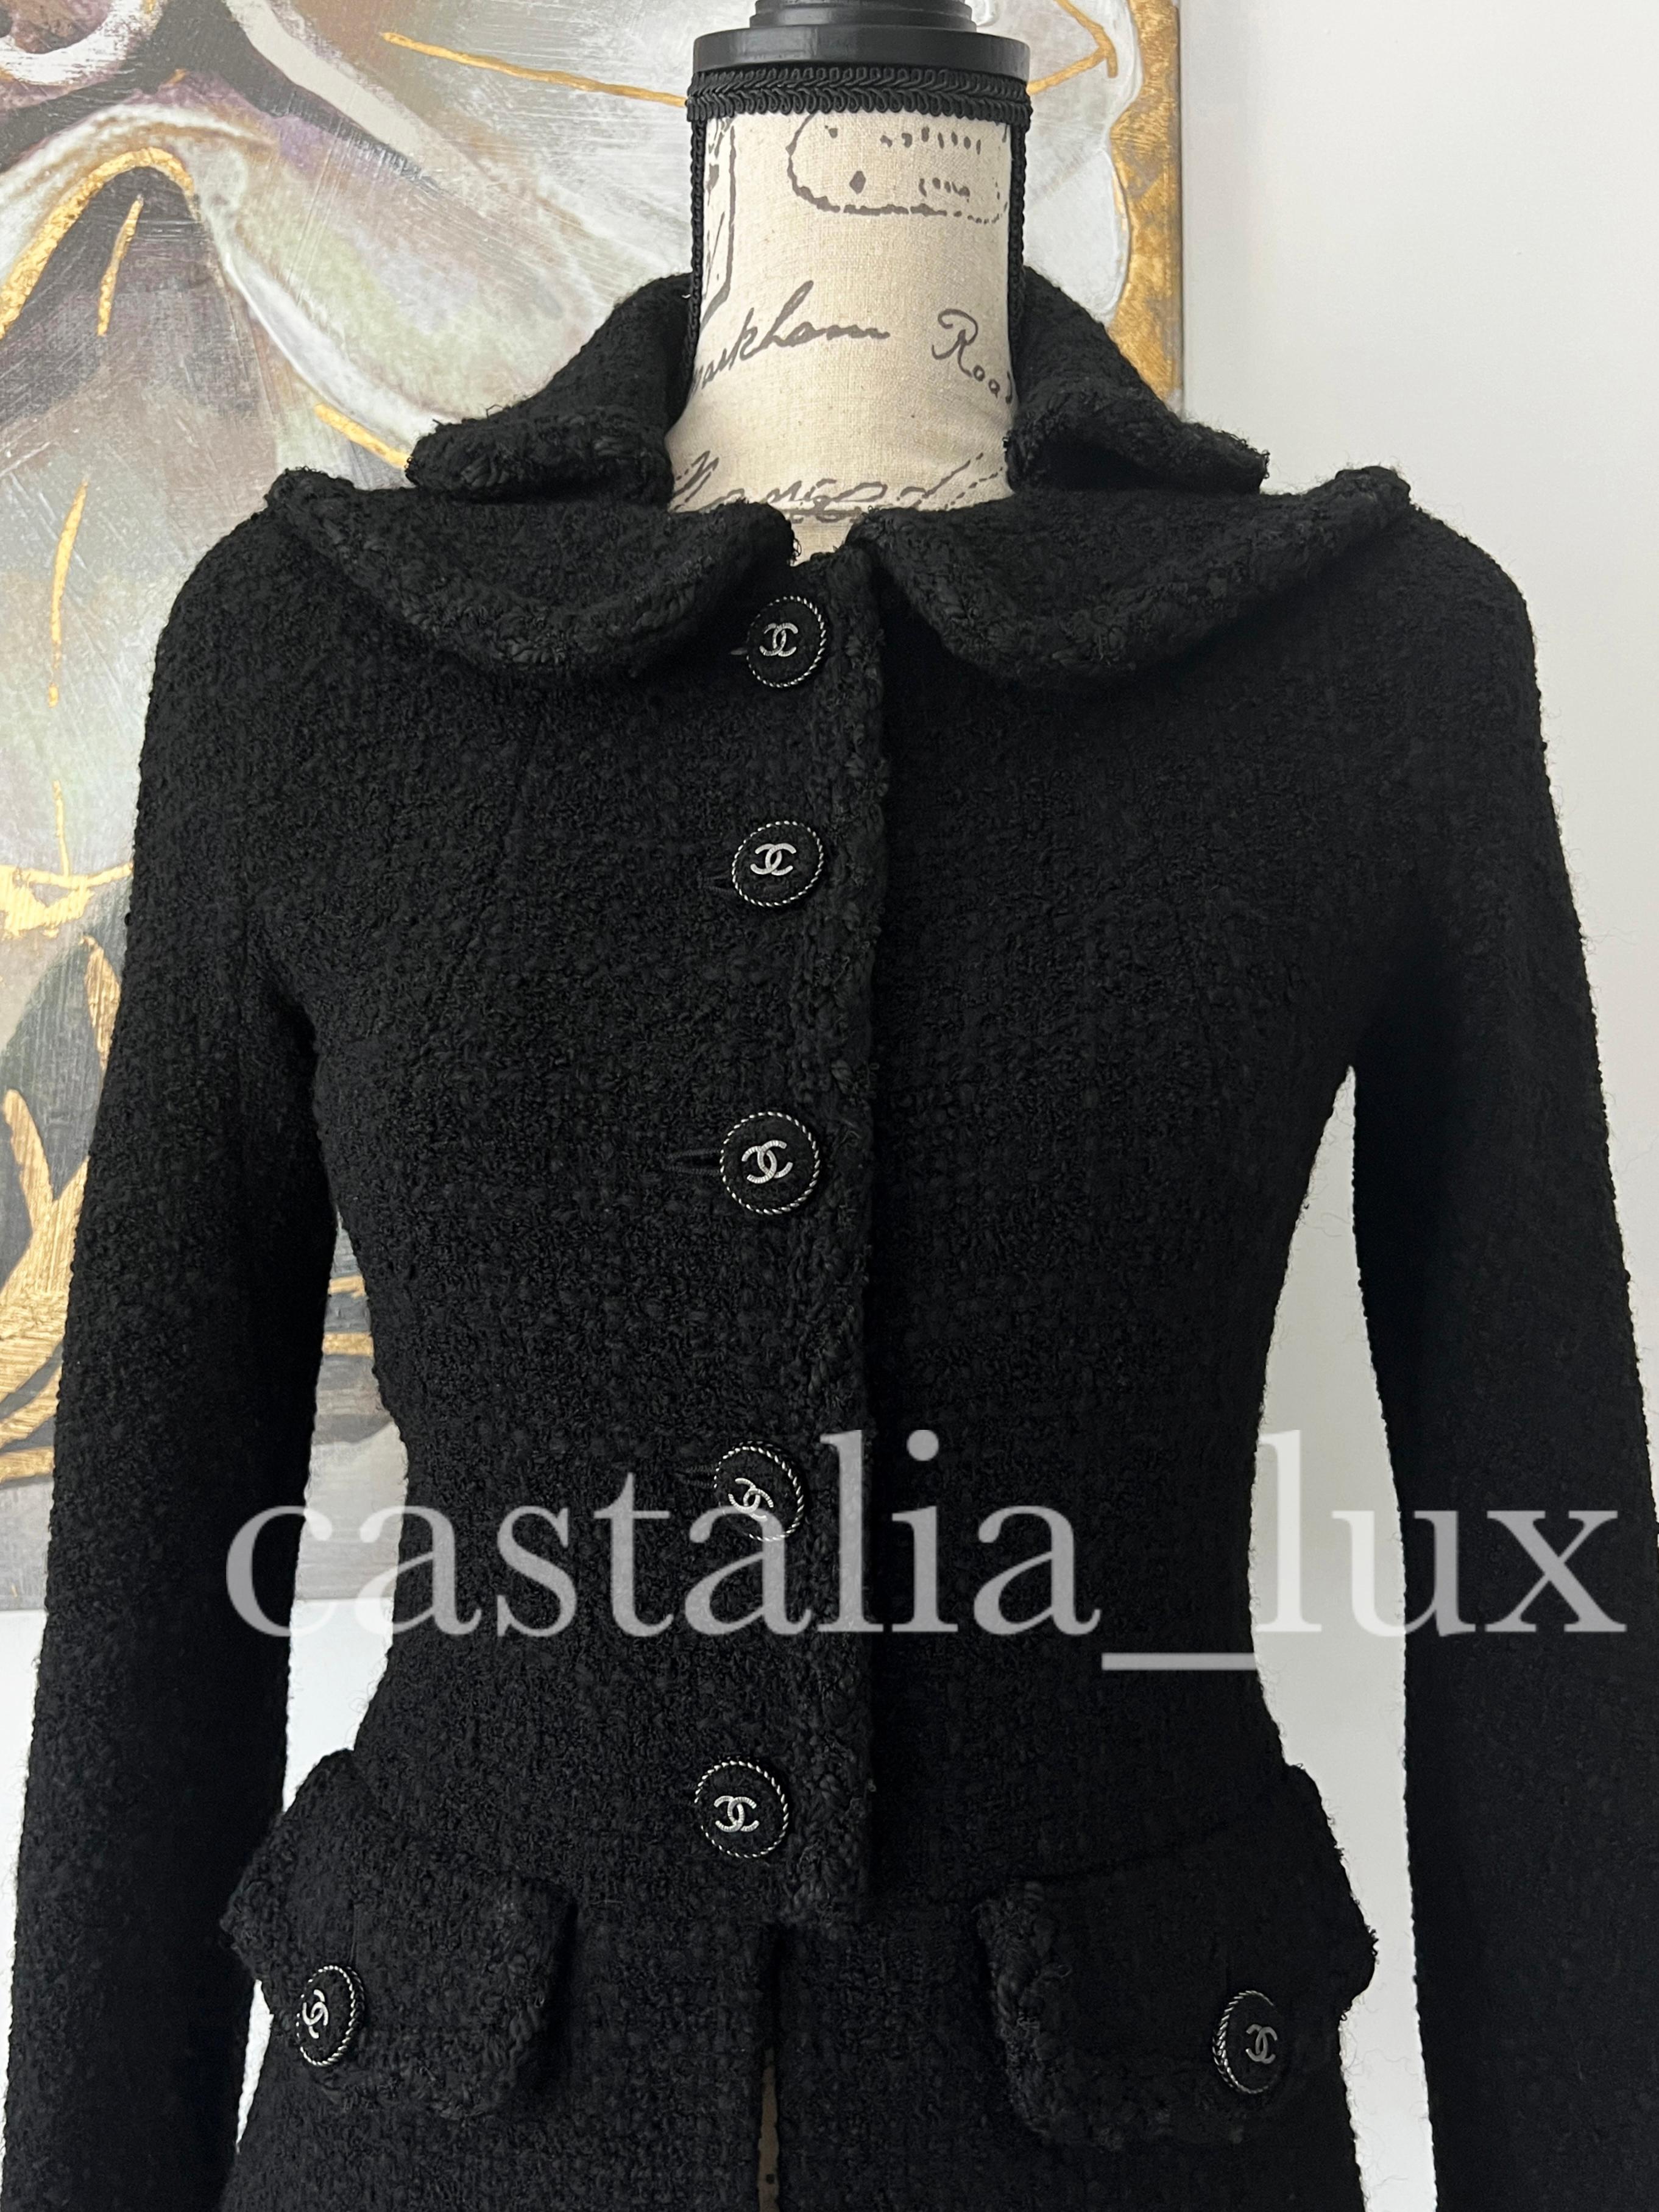 Chanel Statement CC Buttons Black Tweed Jacket 4